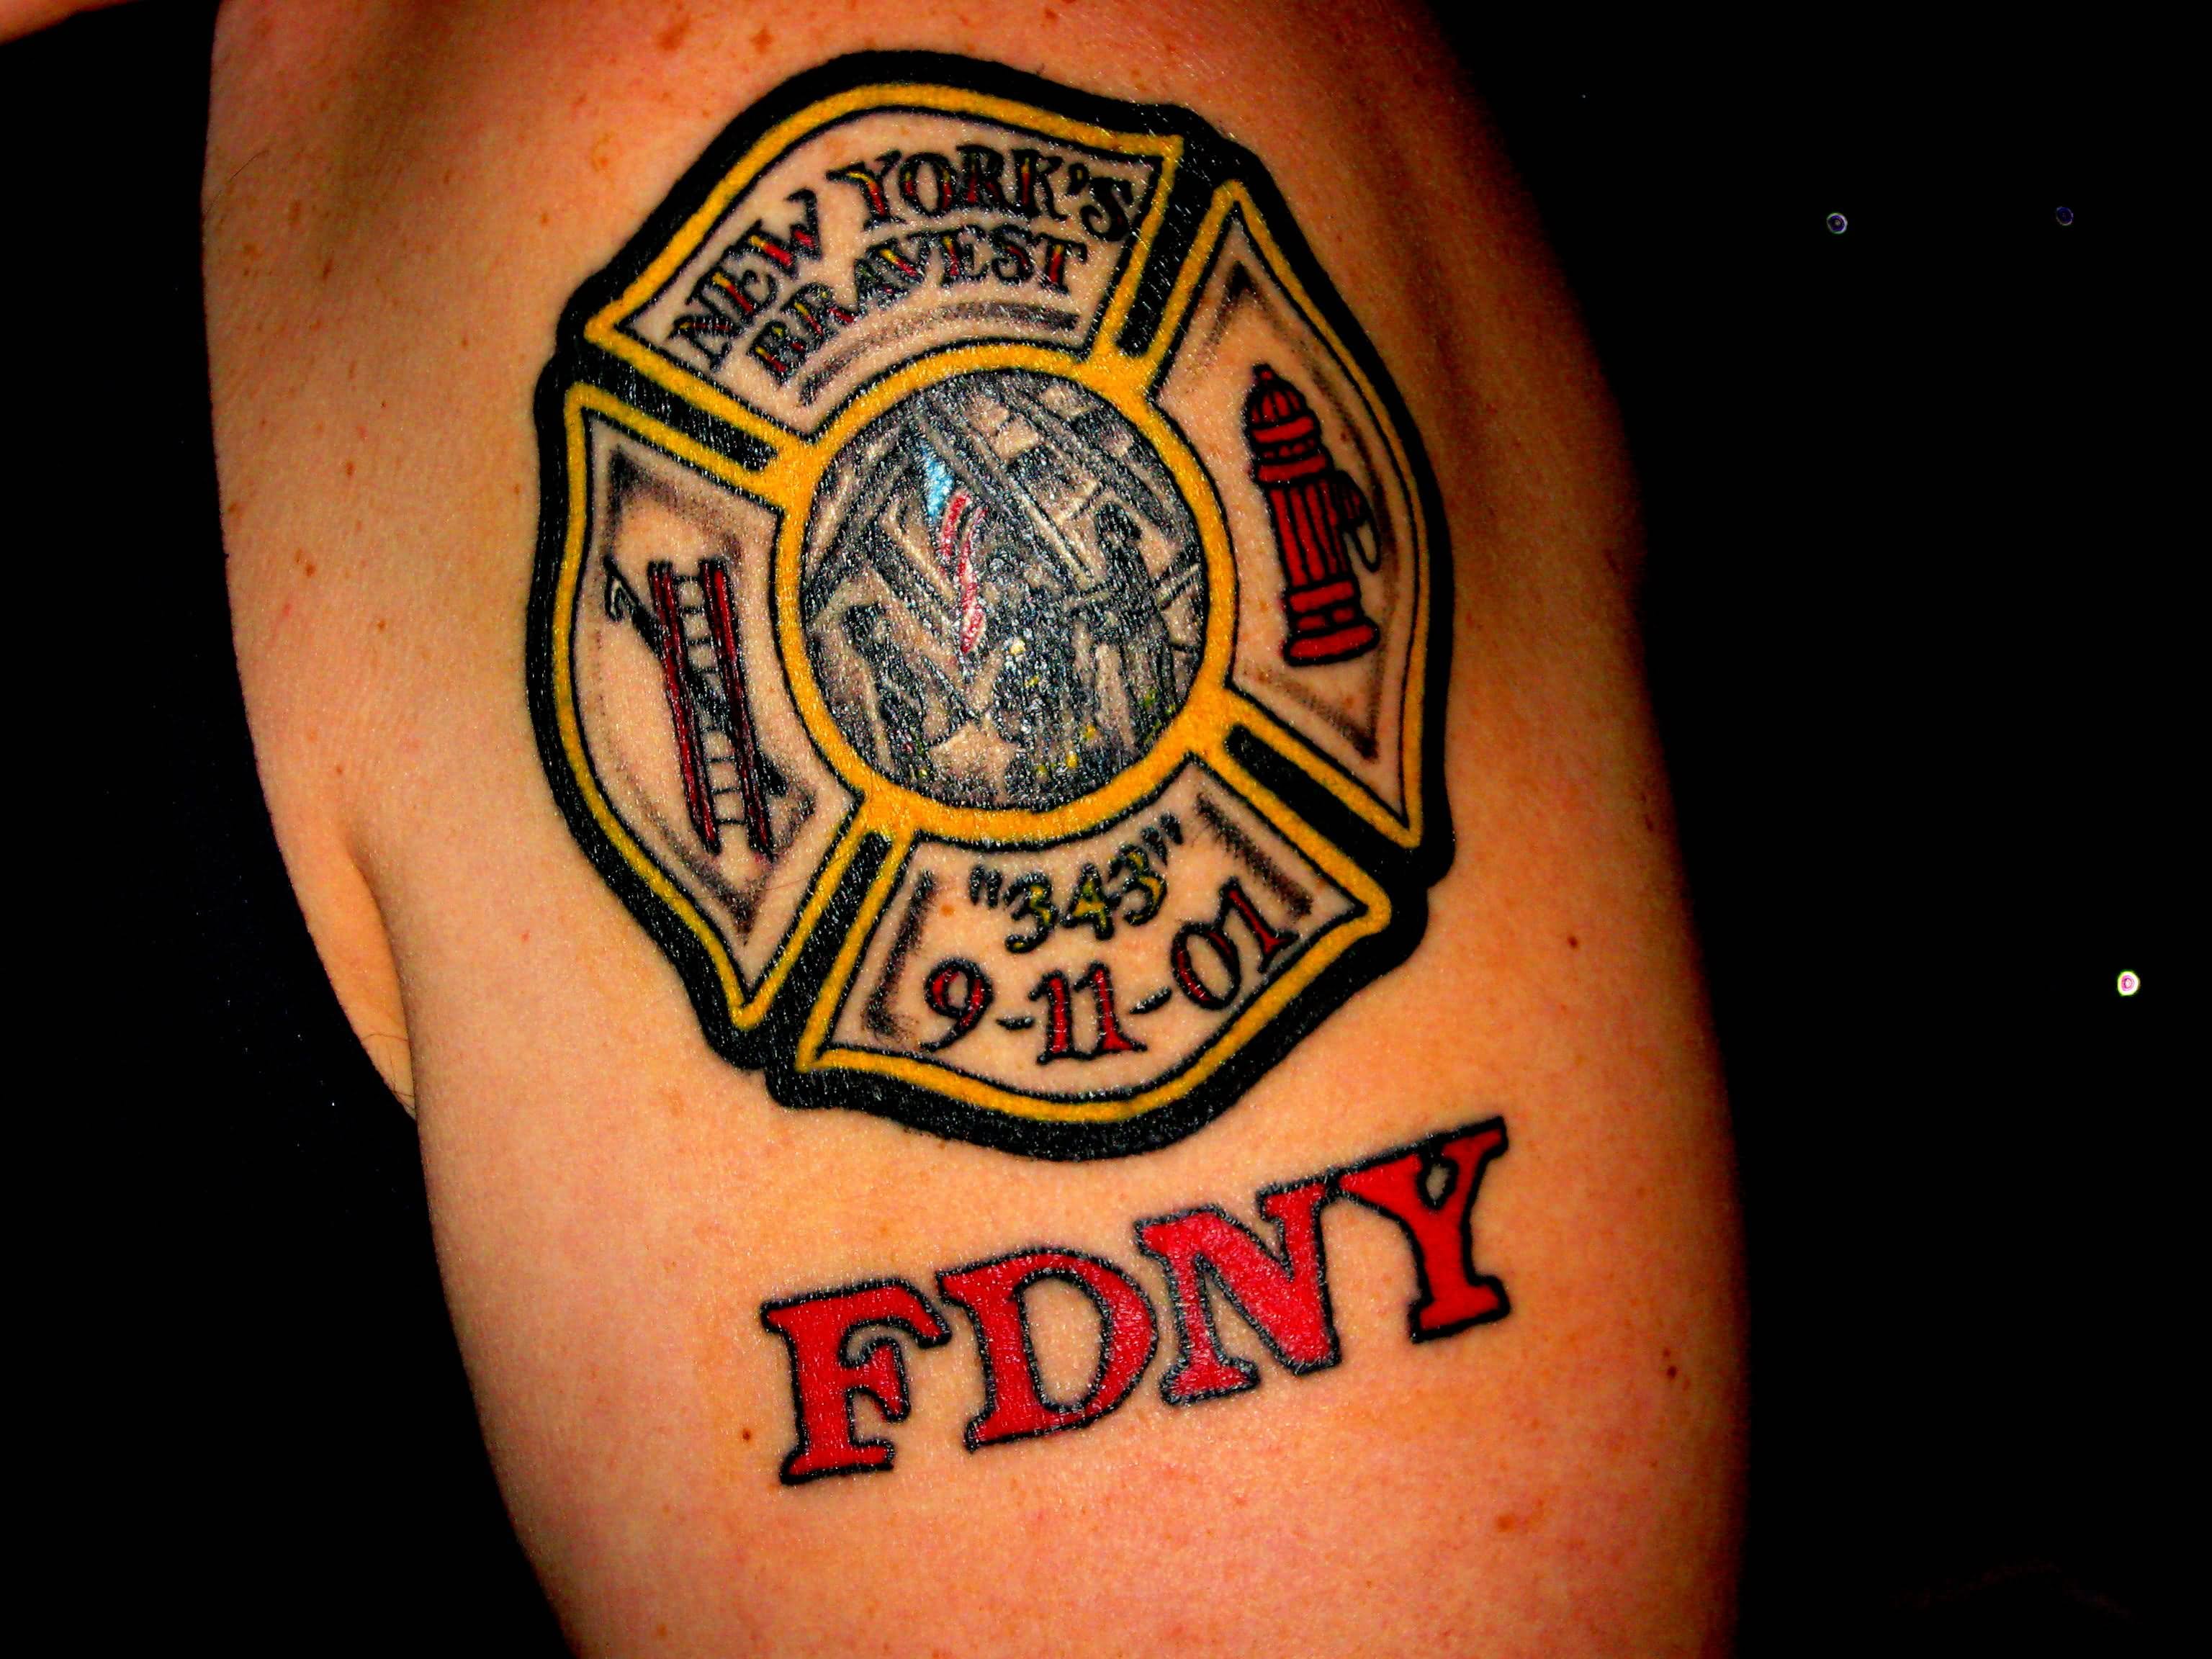 FDNY - Firefighter Cross Tattoo Design For Shoulder